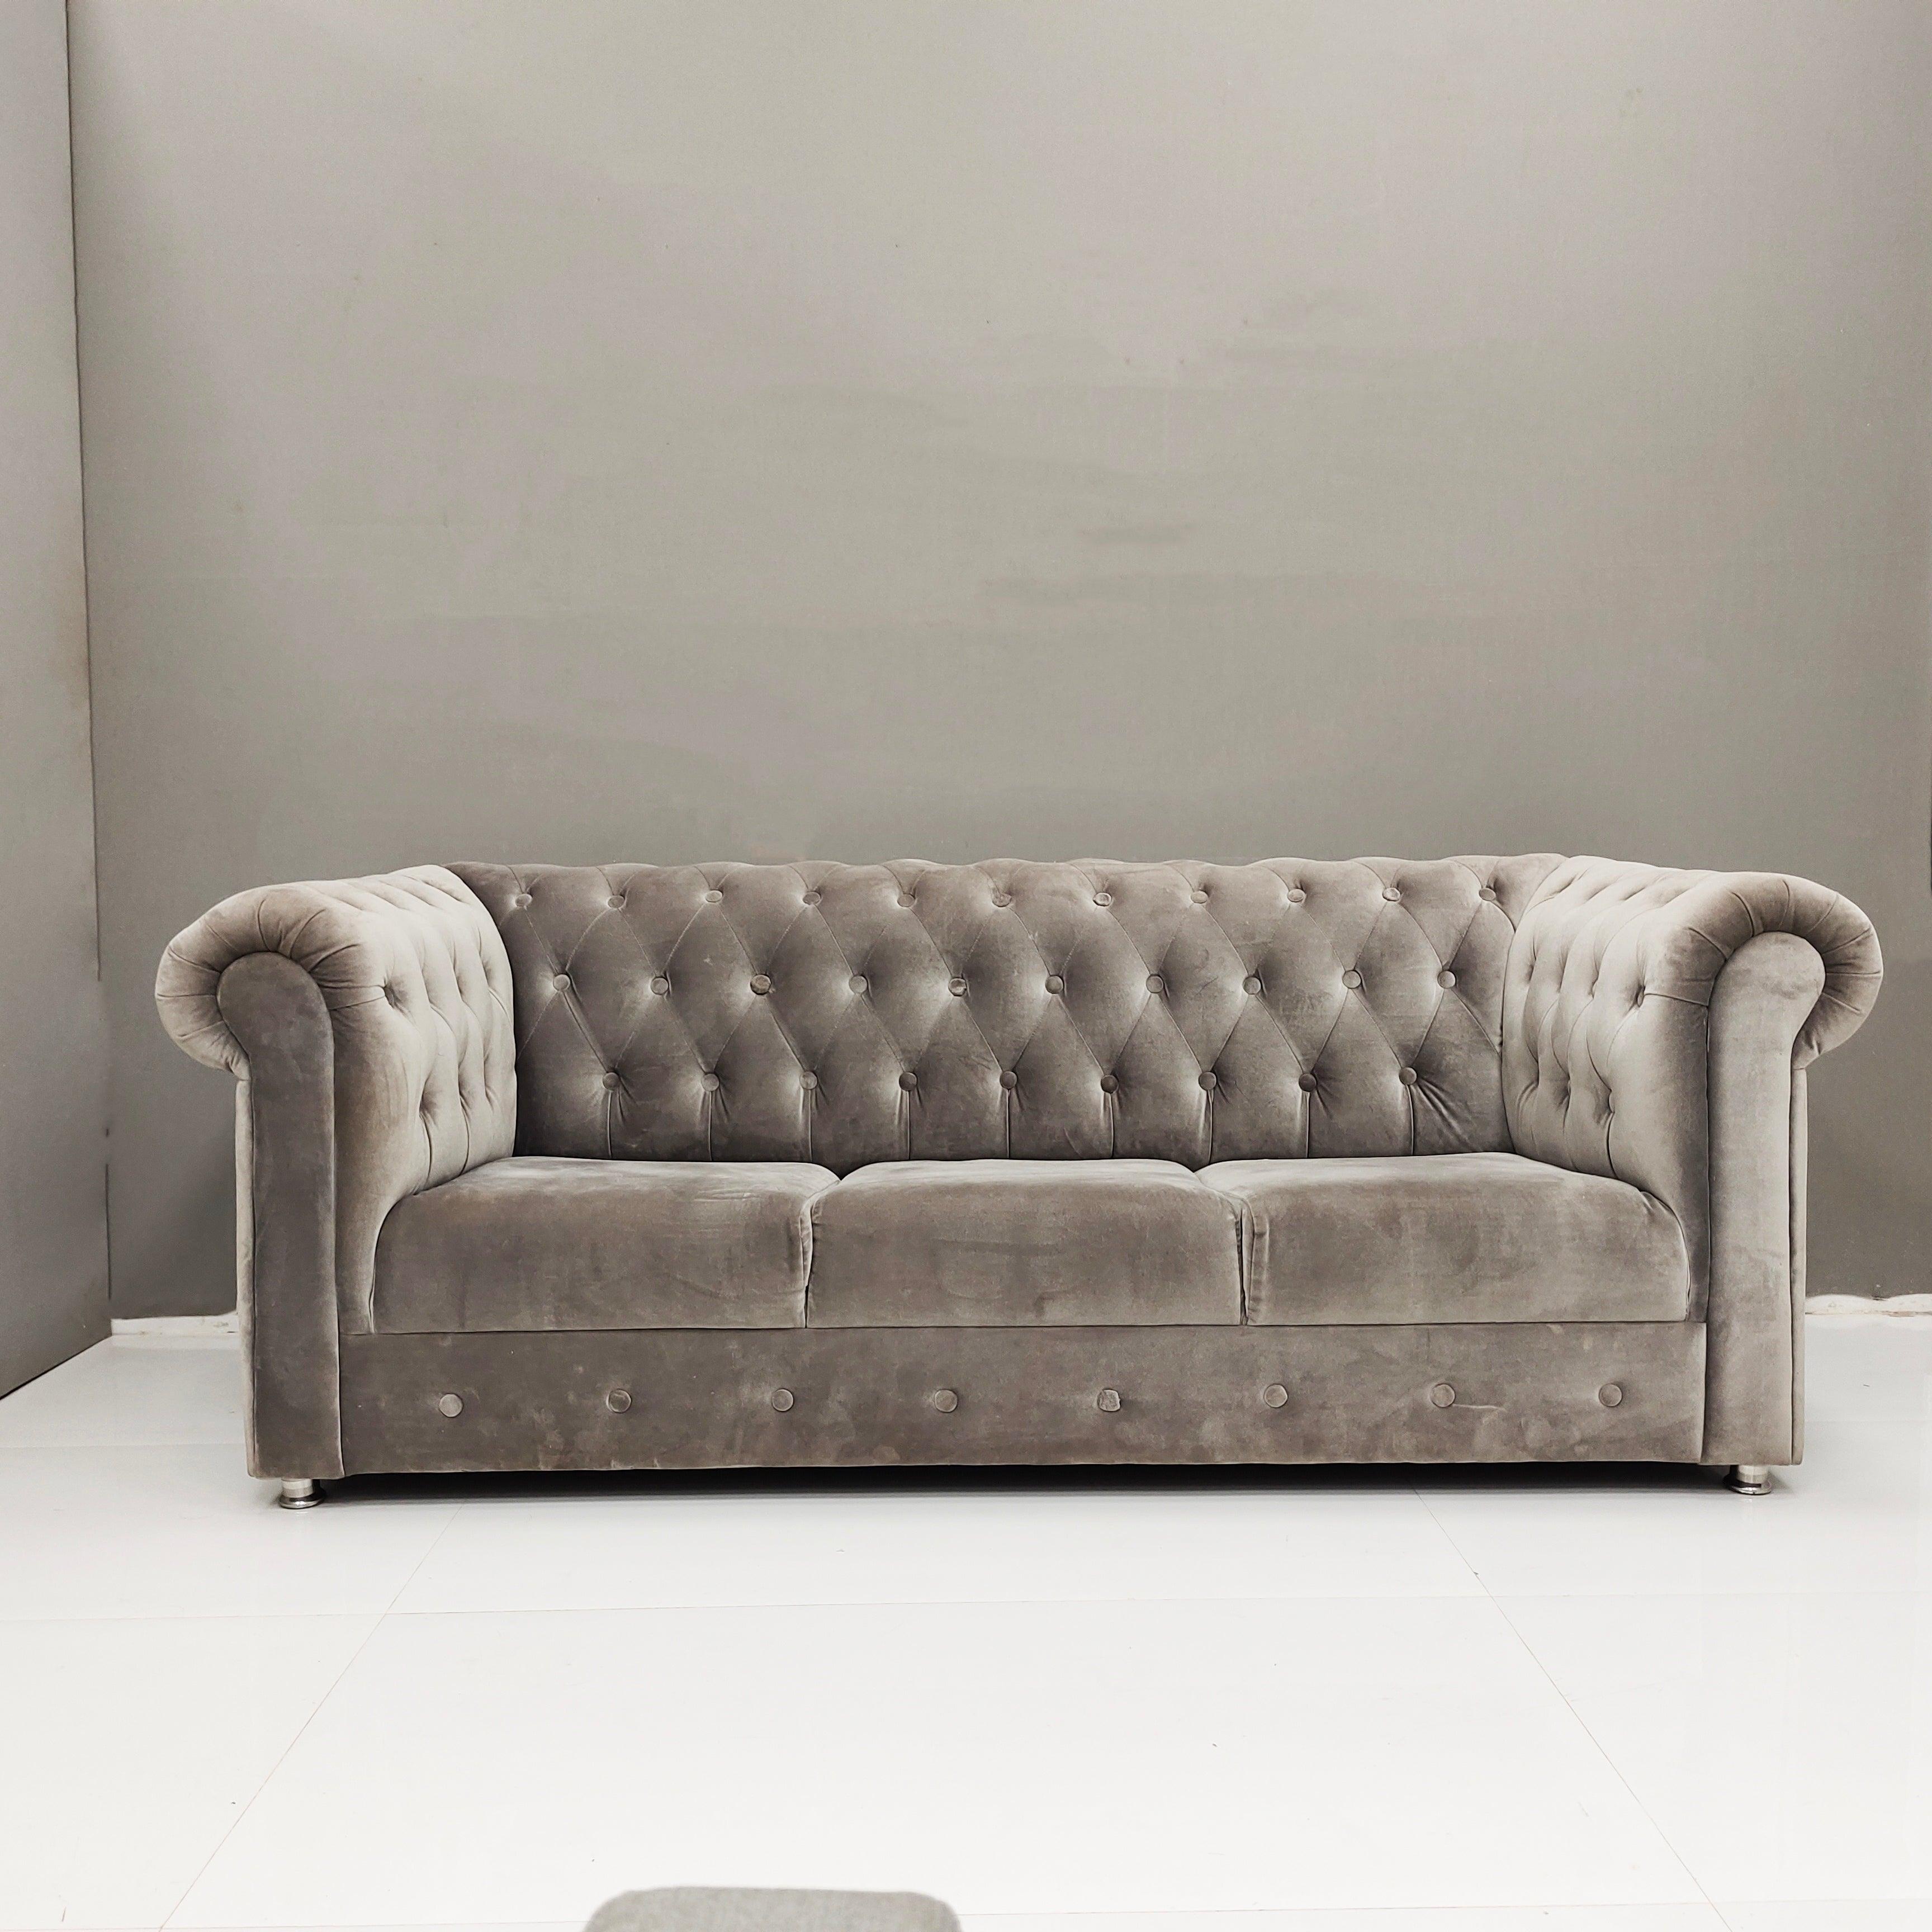 Fornax 3-Seater Sofa - InvisibleBed.com